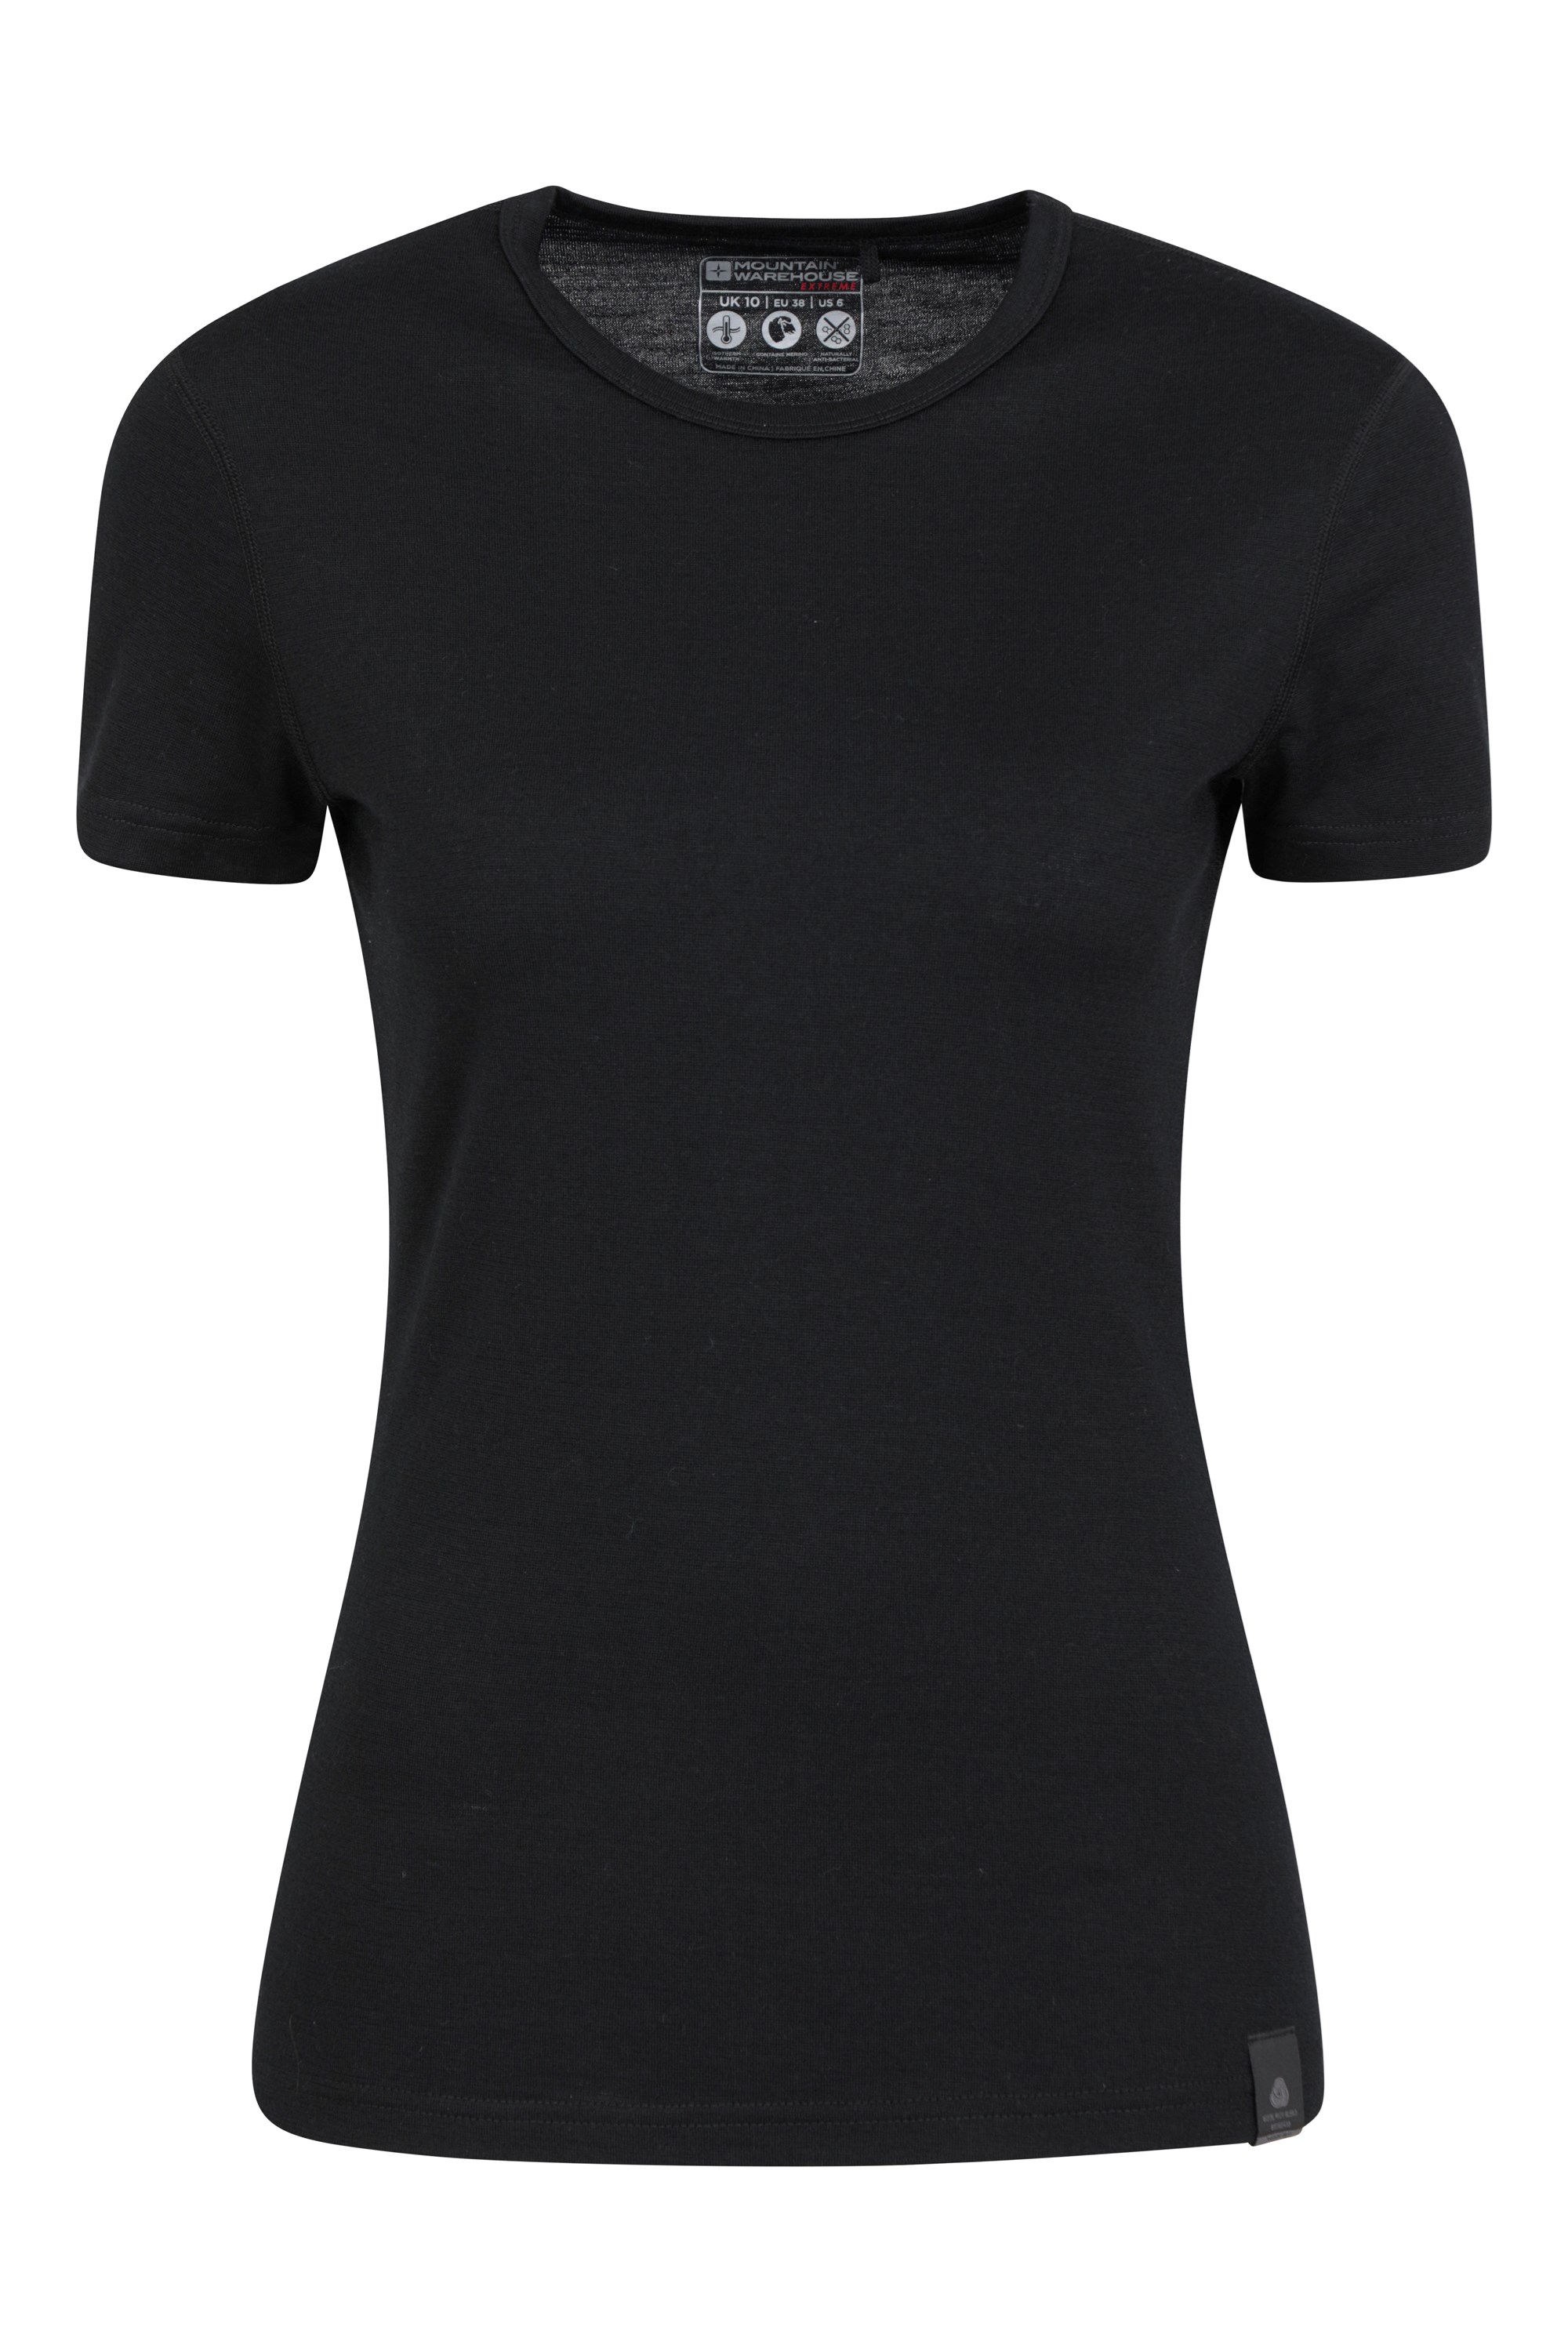 Merino damska koszulka z krótkim rękawem - Black